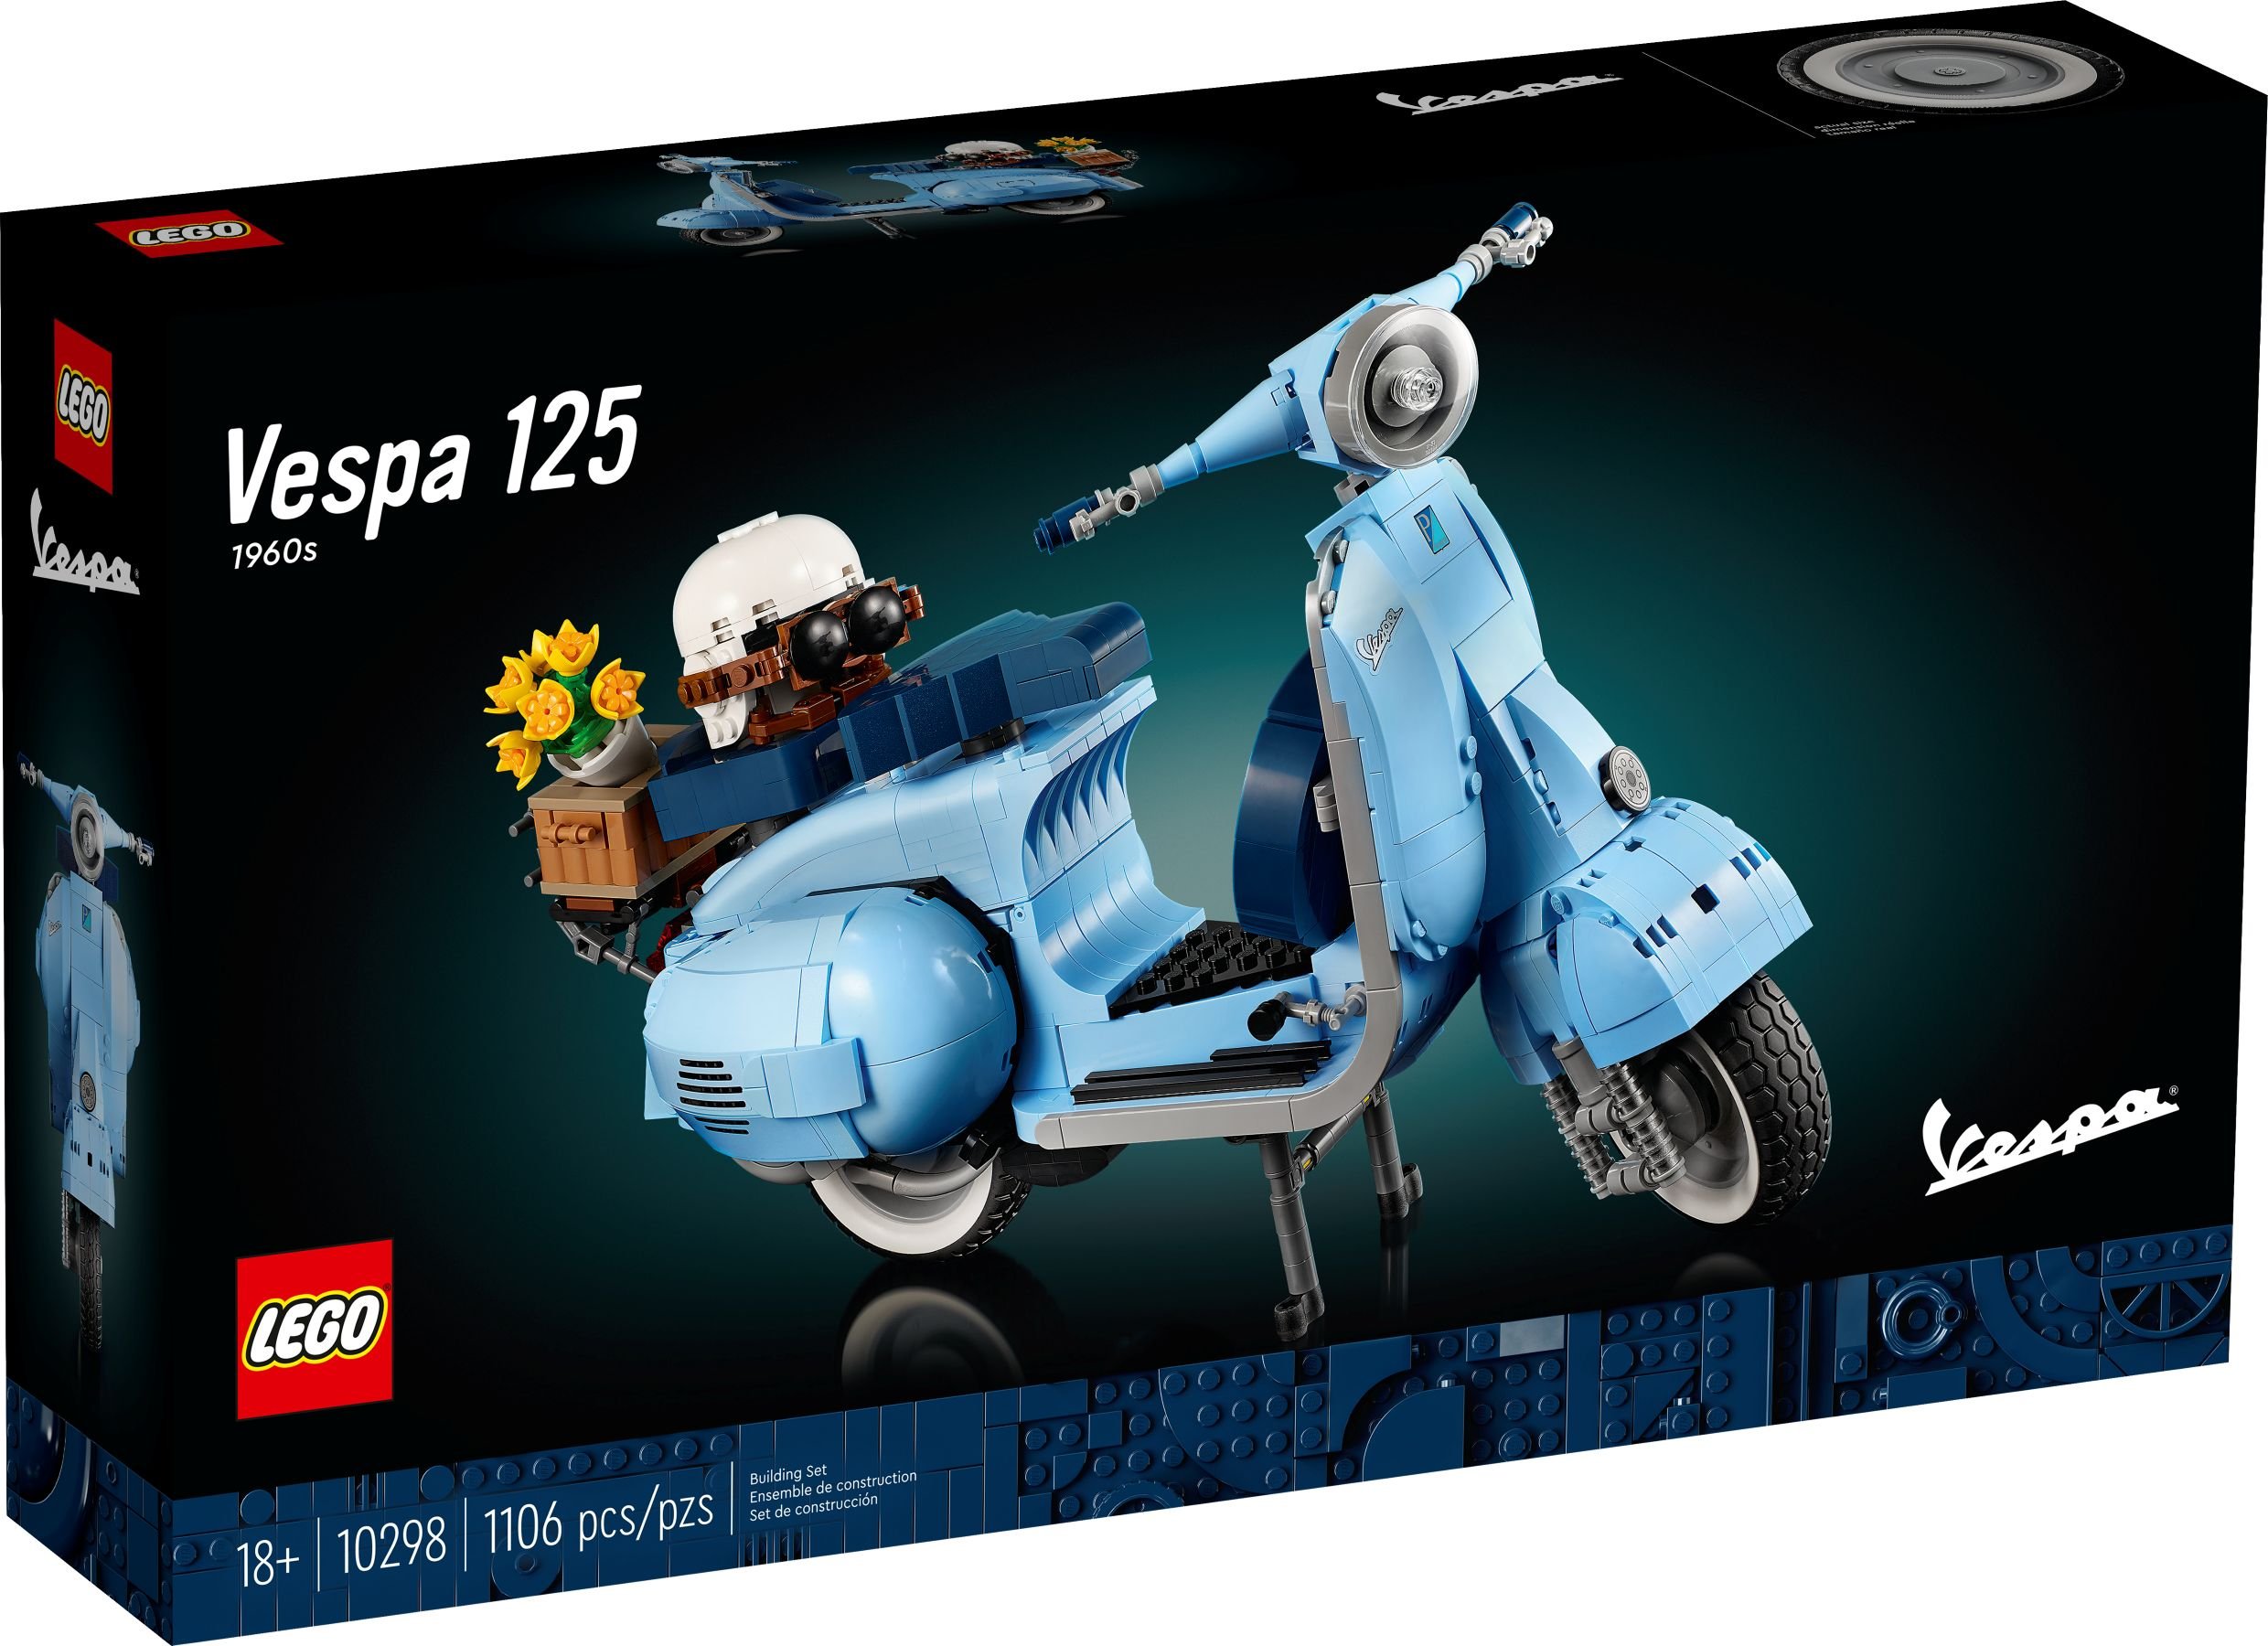 LEGO Advanced Models 10298 Vespa 125 LEGO_10298_alt1.jpg